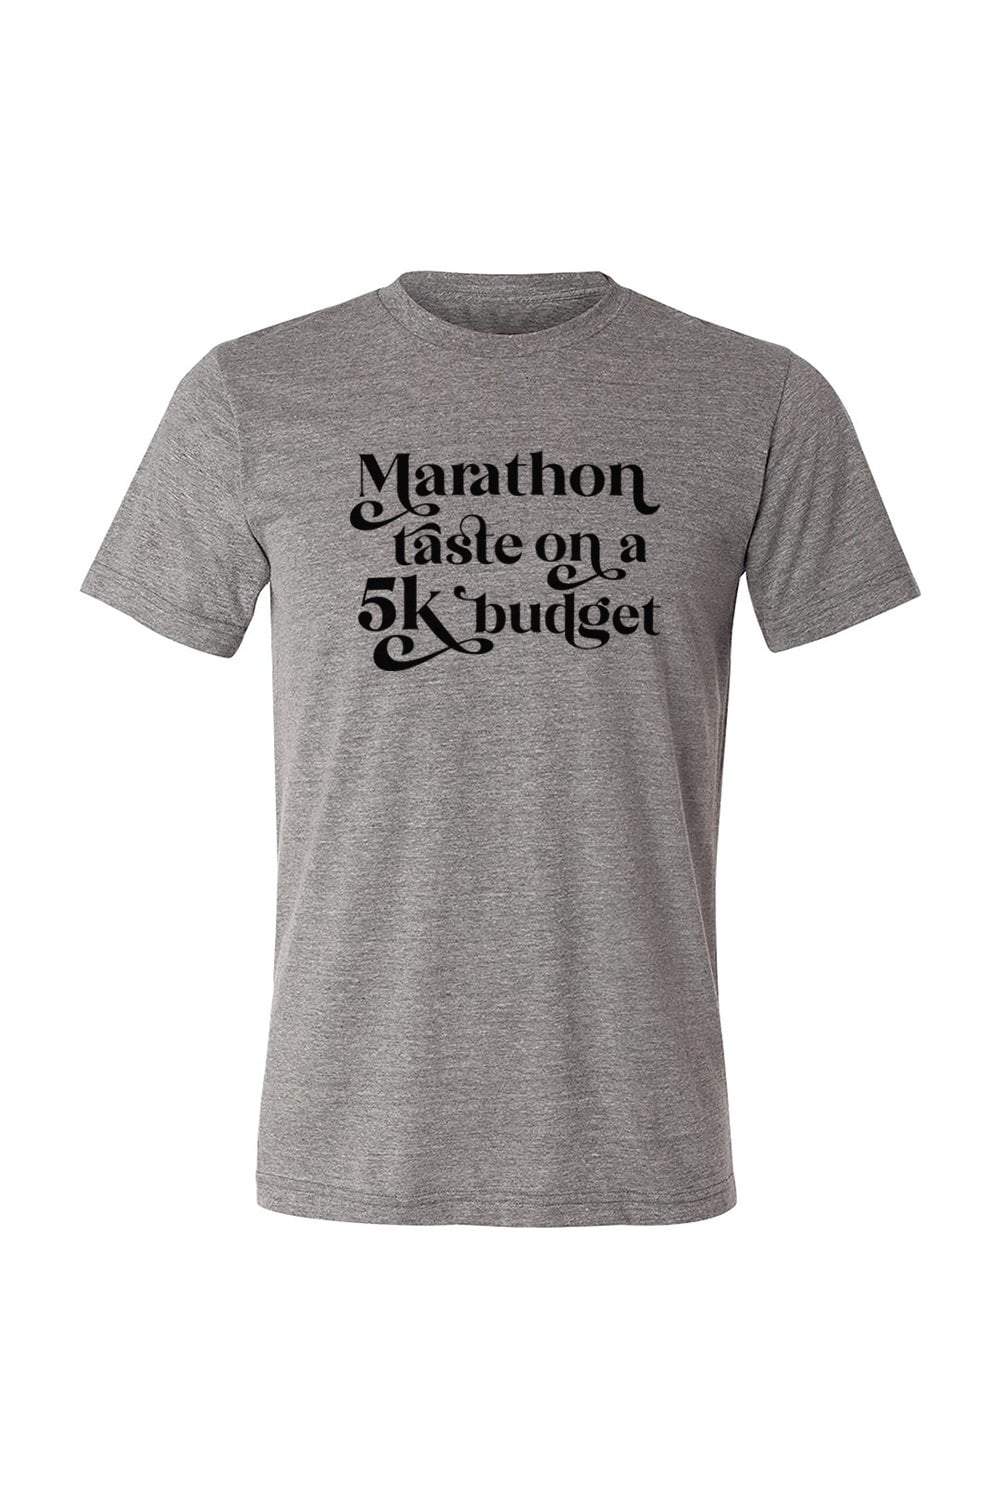 Sarah Marie Design Studio Unisex Tee Marathon Taste on a 5k Budget Unisex T-shirt